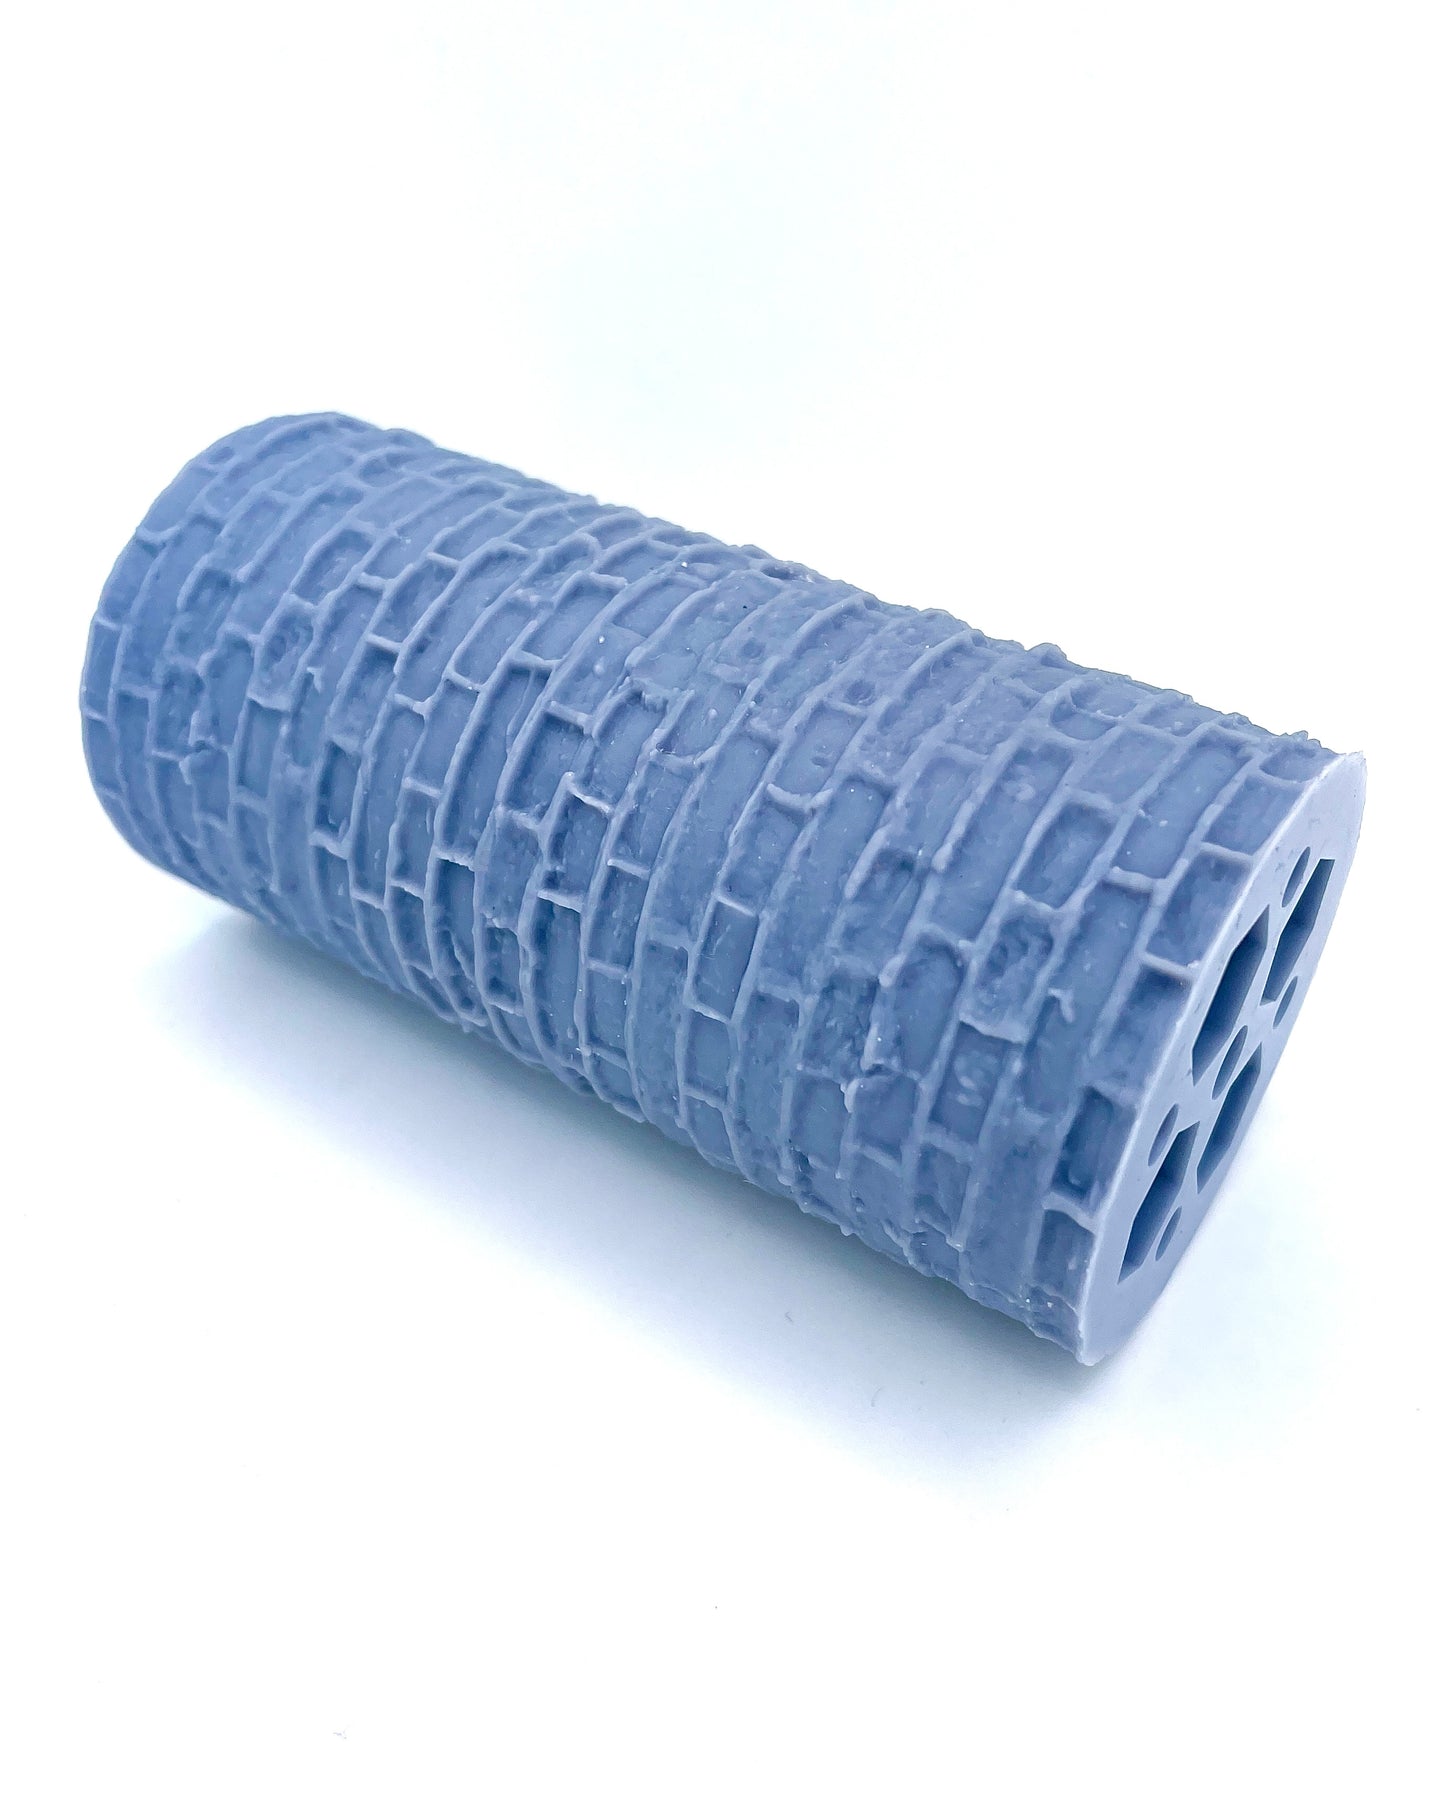 Texture Roller: Aged Brick